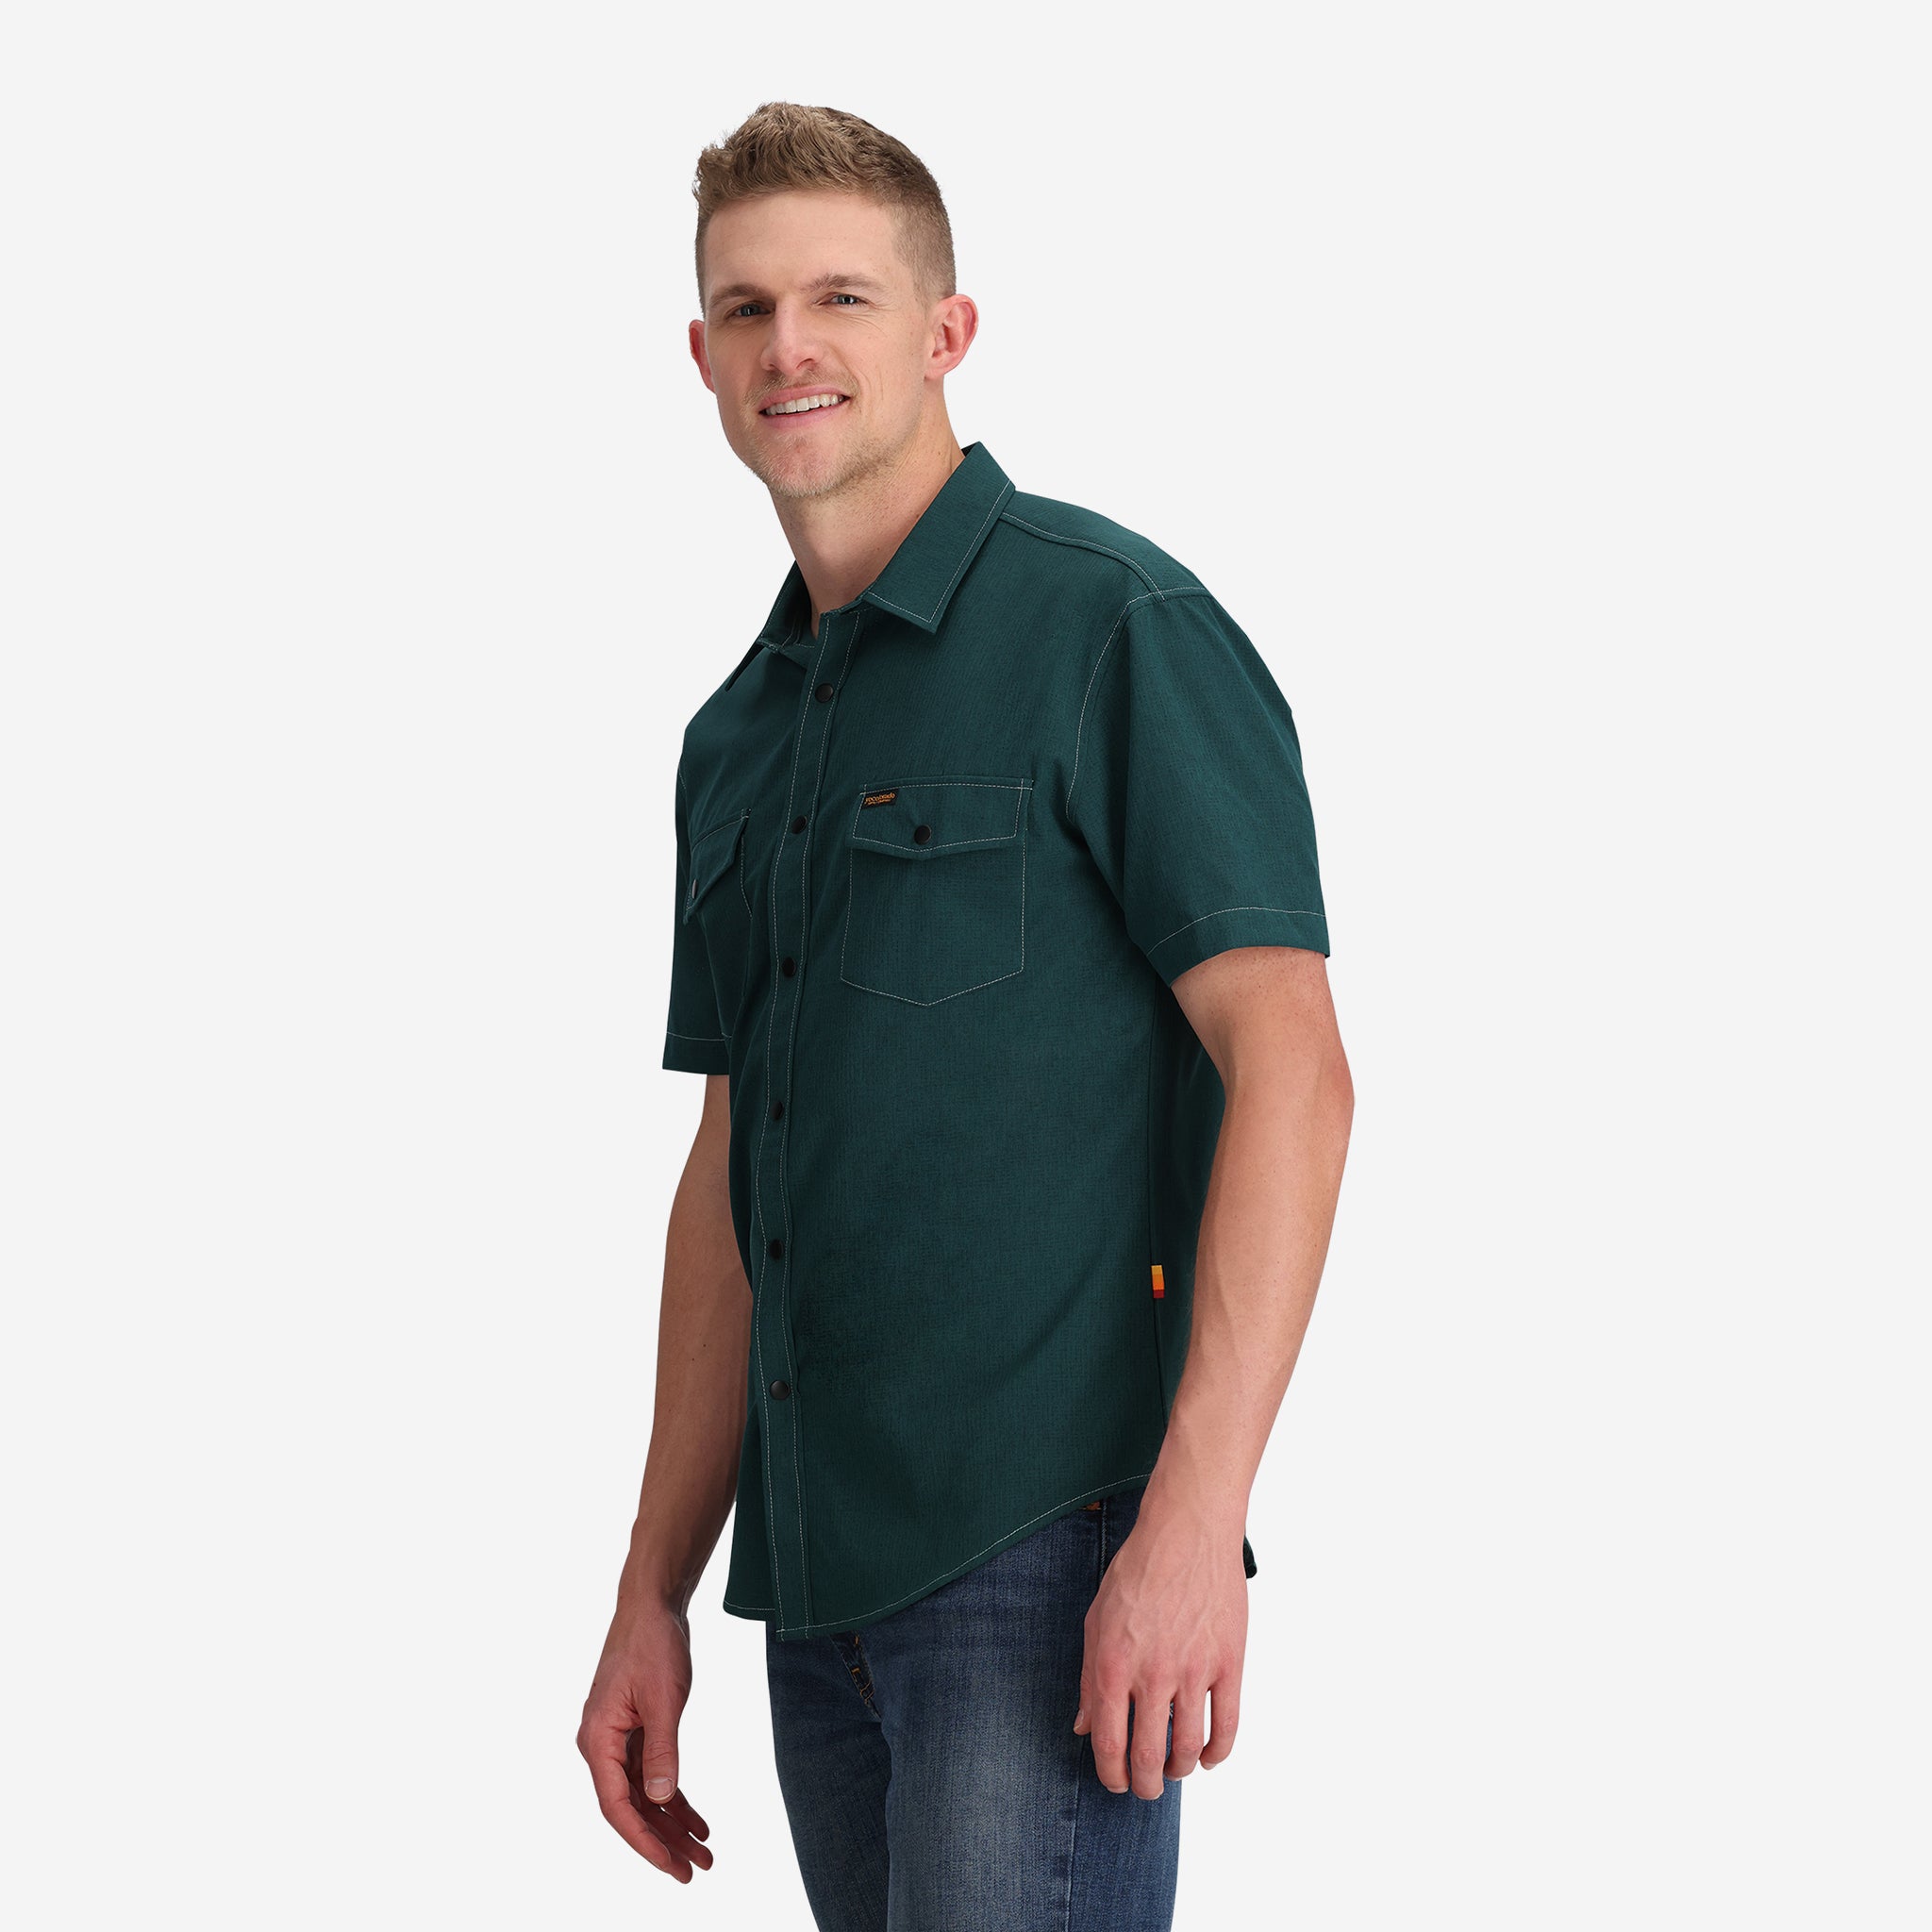 Men's Enduro Solid Teal Tech Shirt